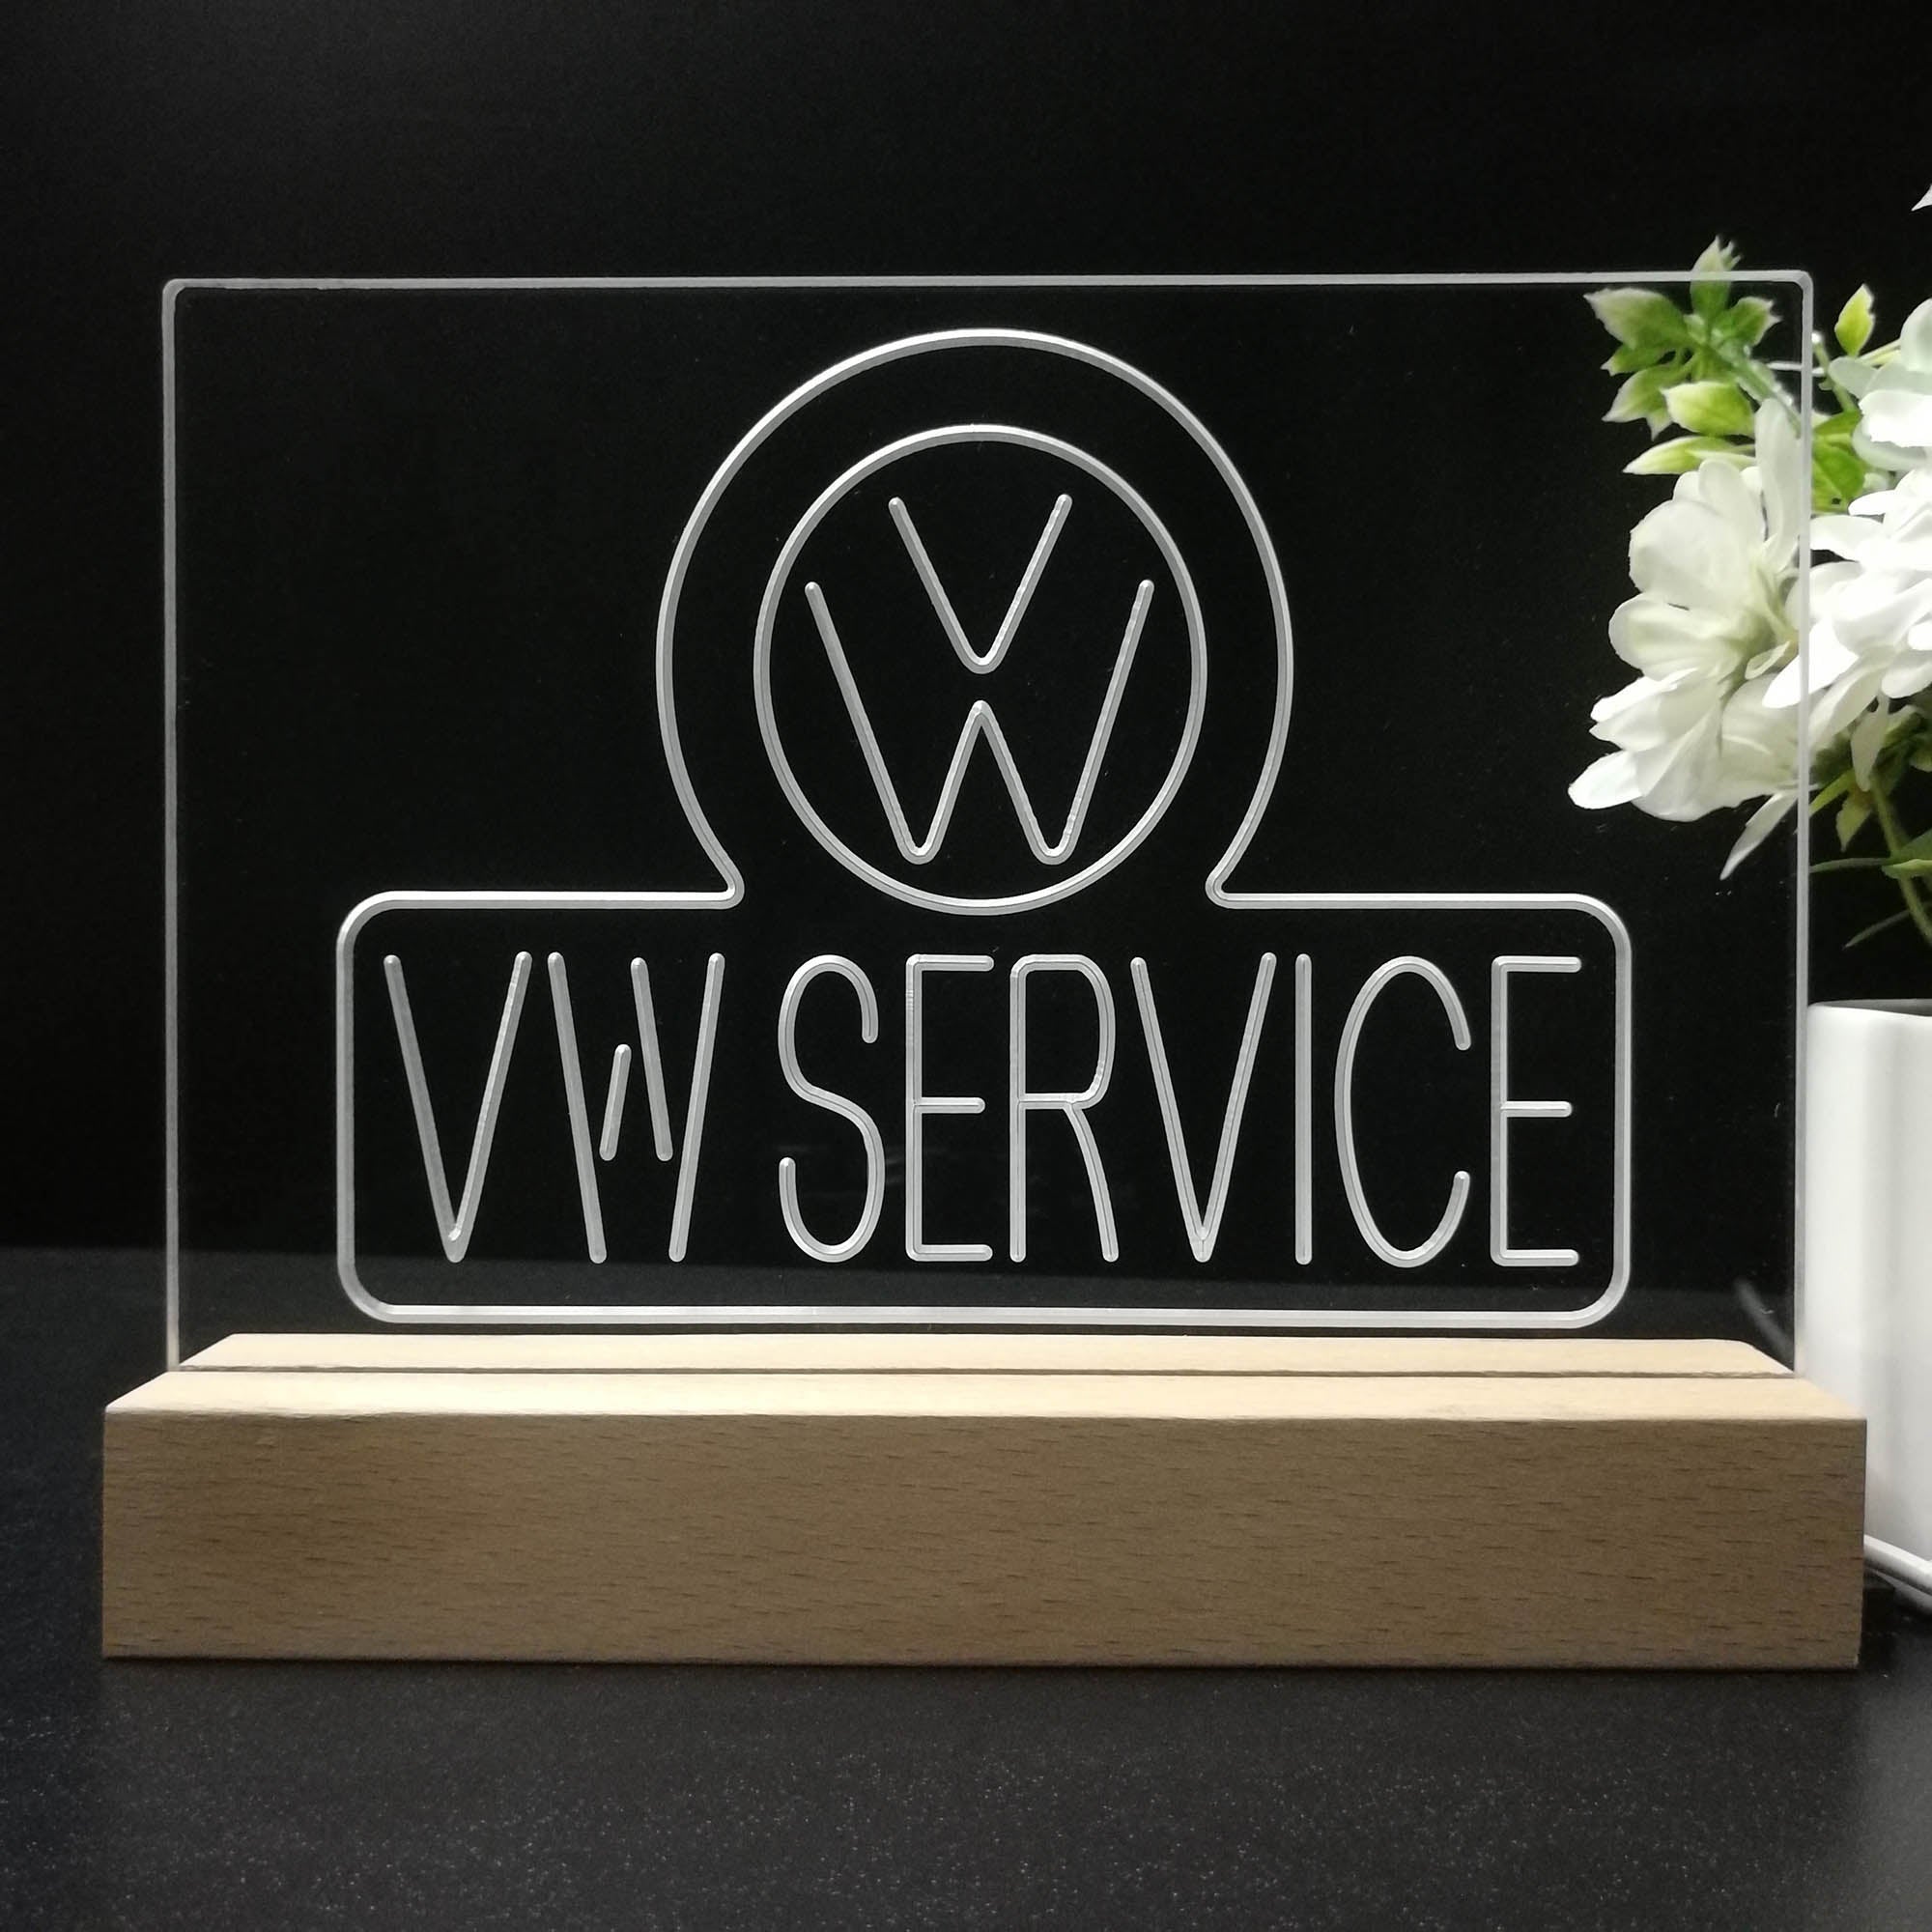 Volkswagen VW Service Night Light LED Sign